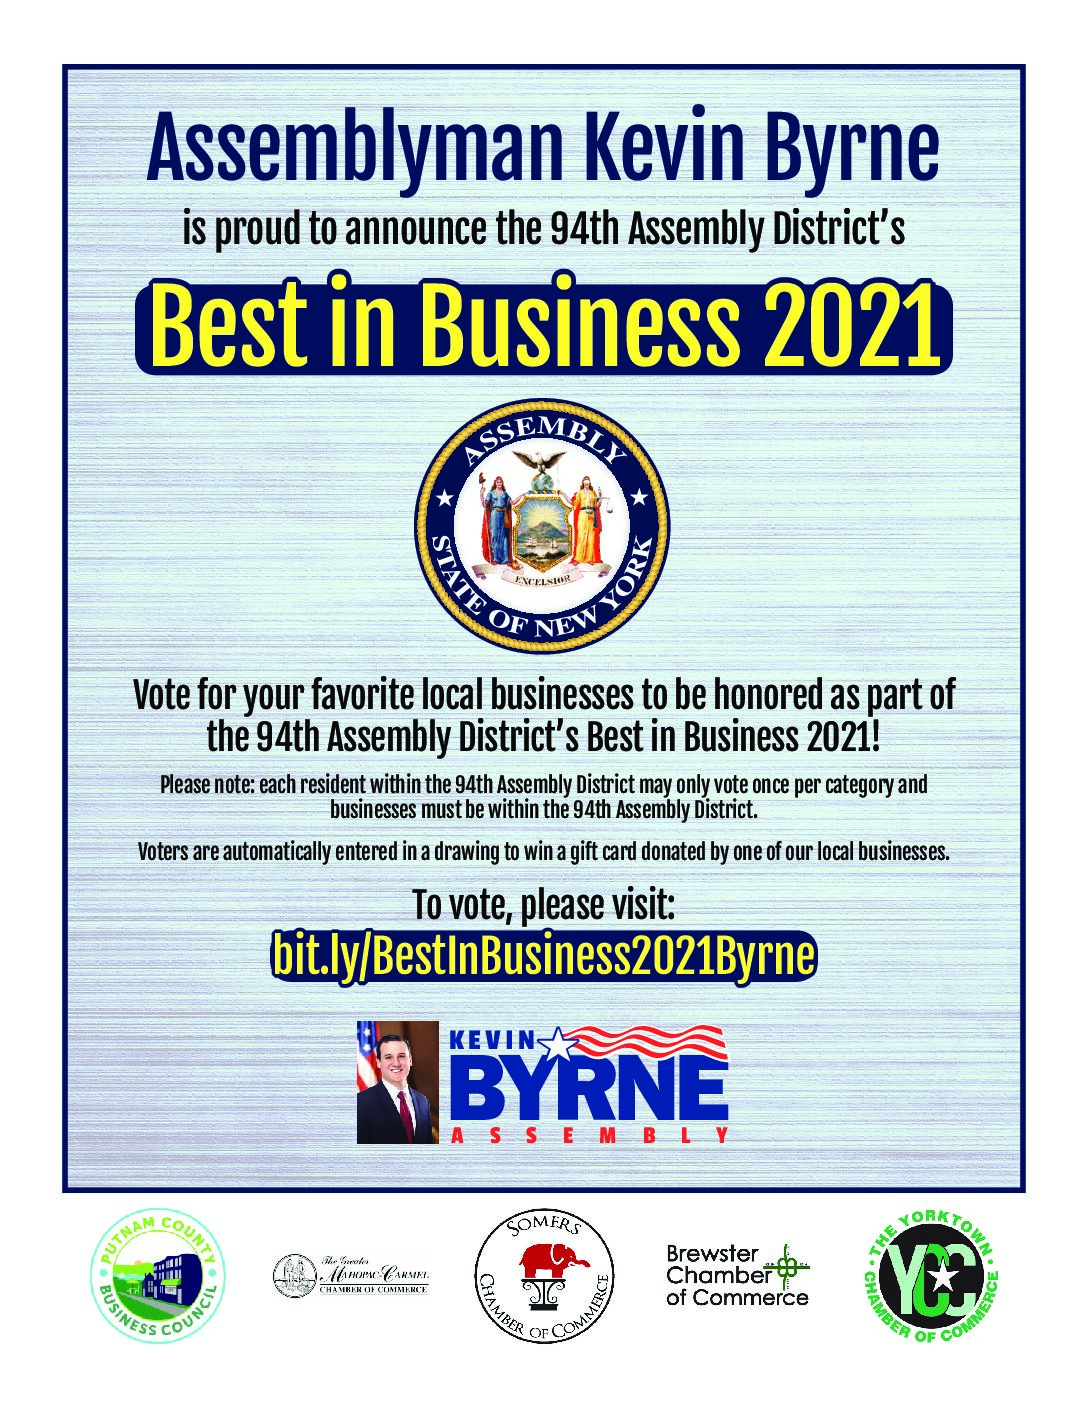 Best in Business 2021 Contest Voting Open